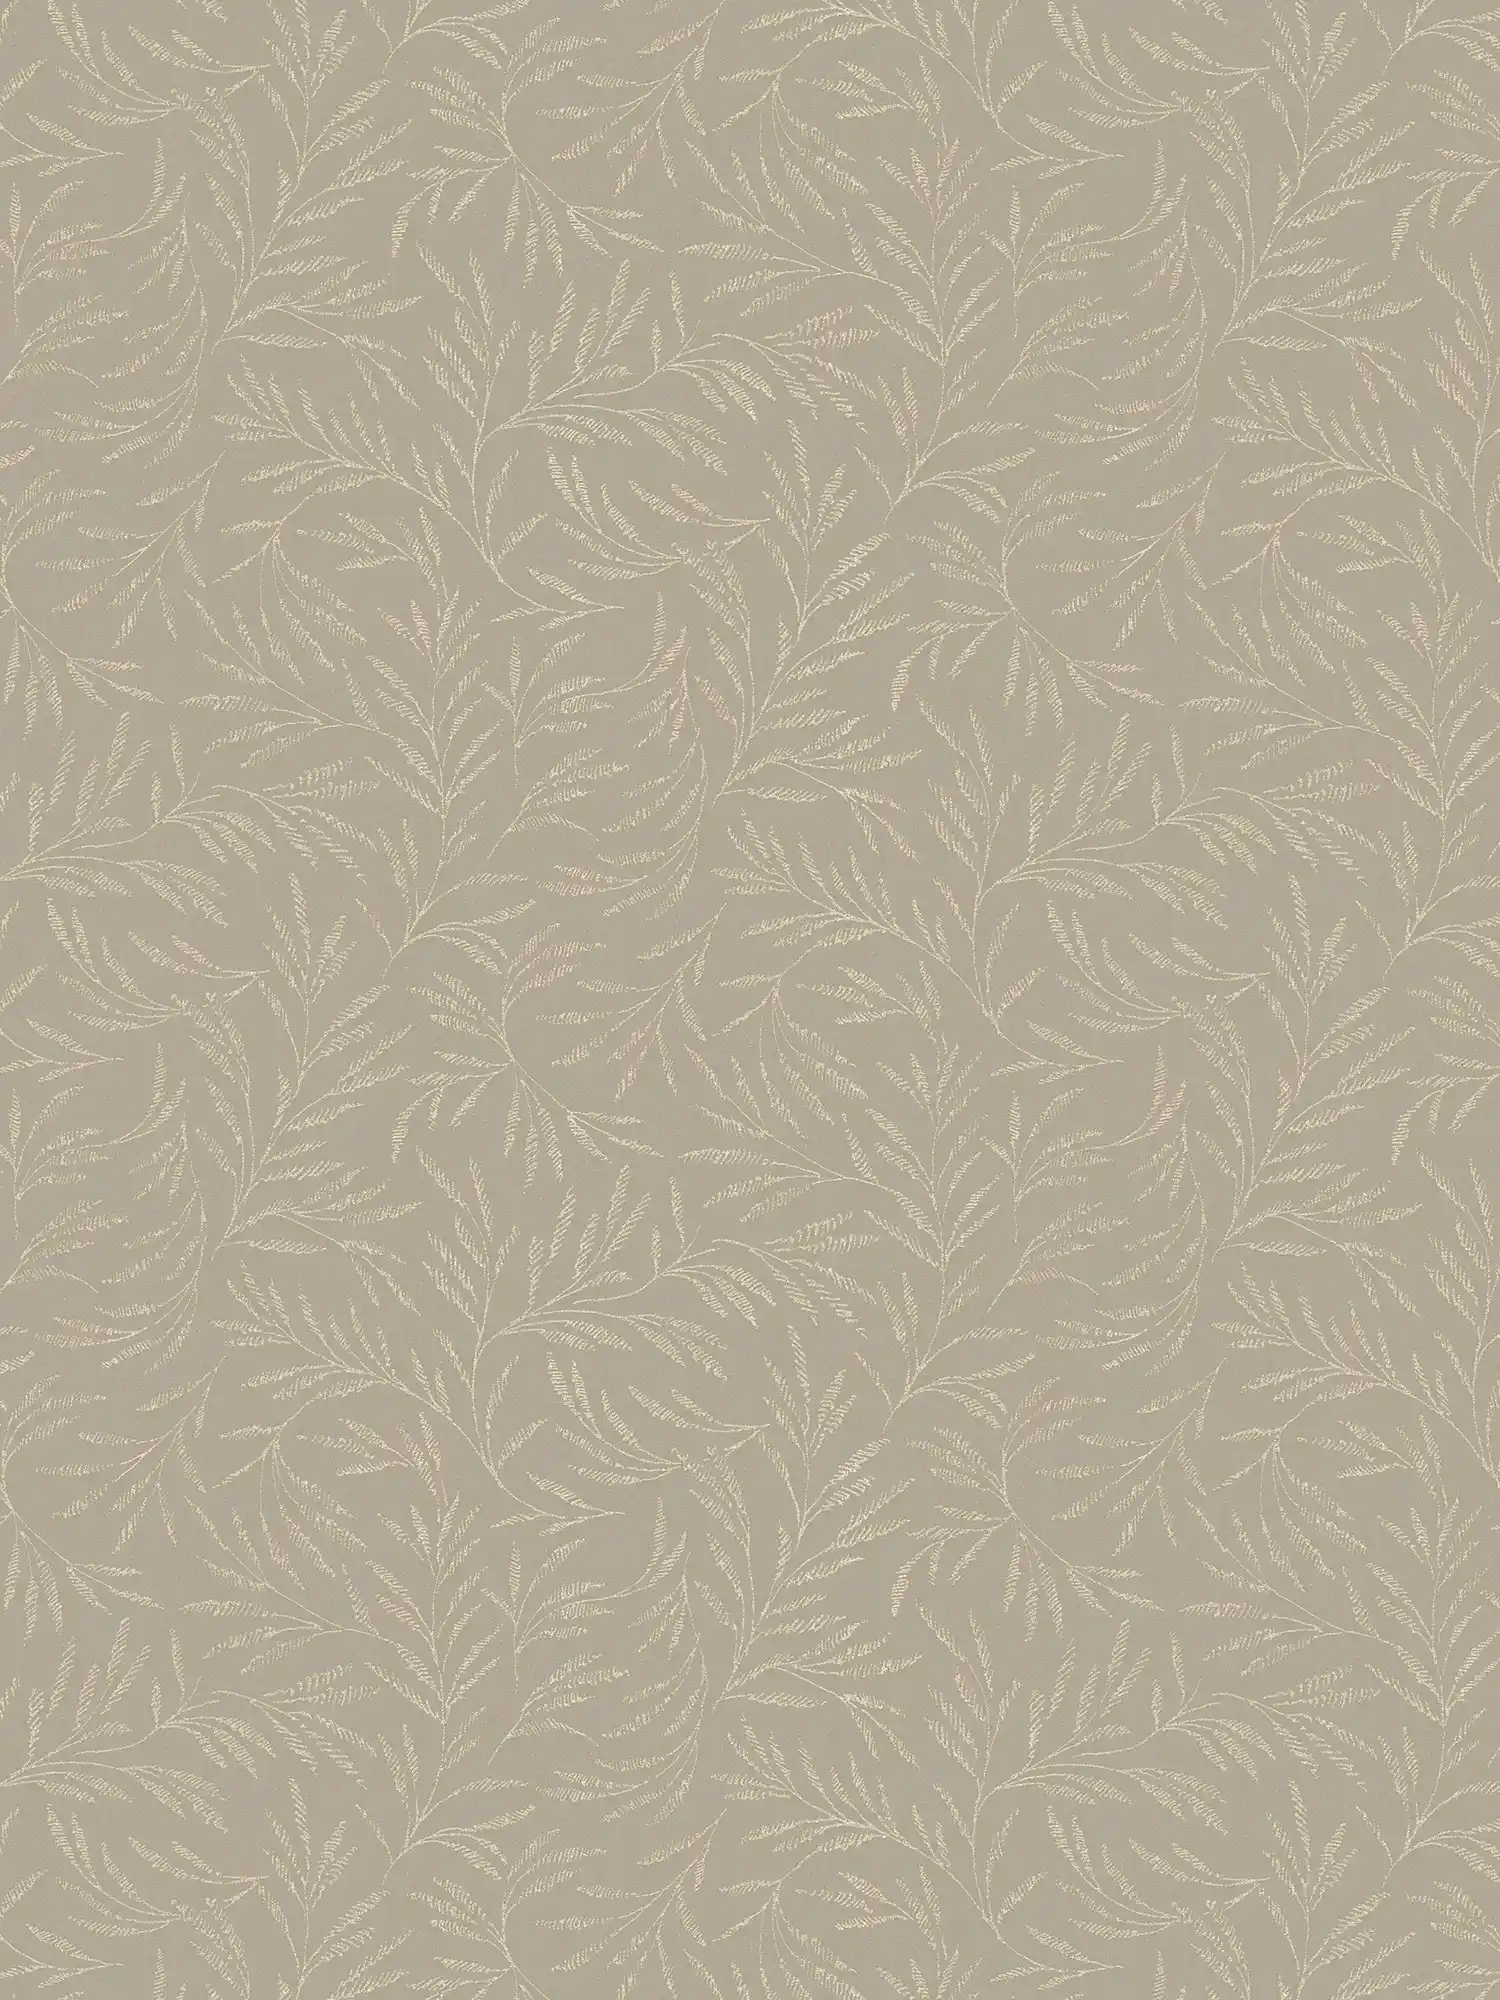         Muster-Tapete Metallic Blätter Ranken – Braun, Grau
    